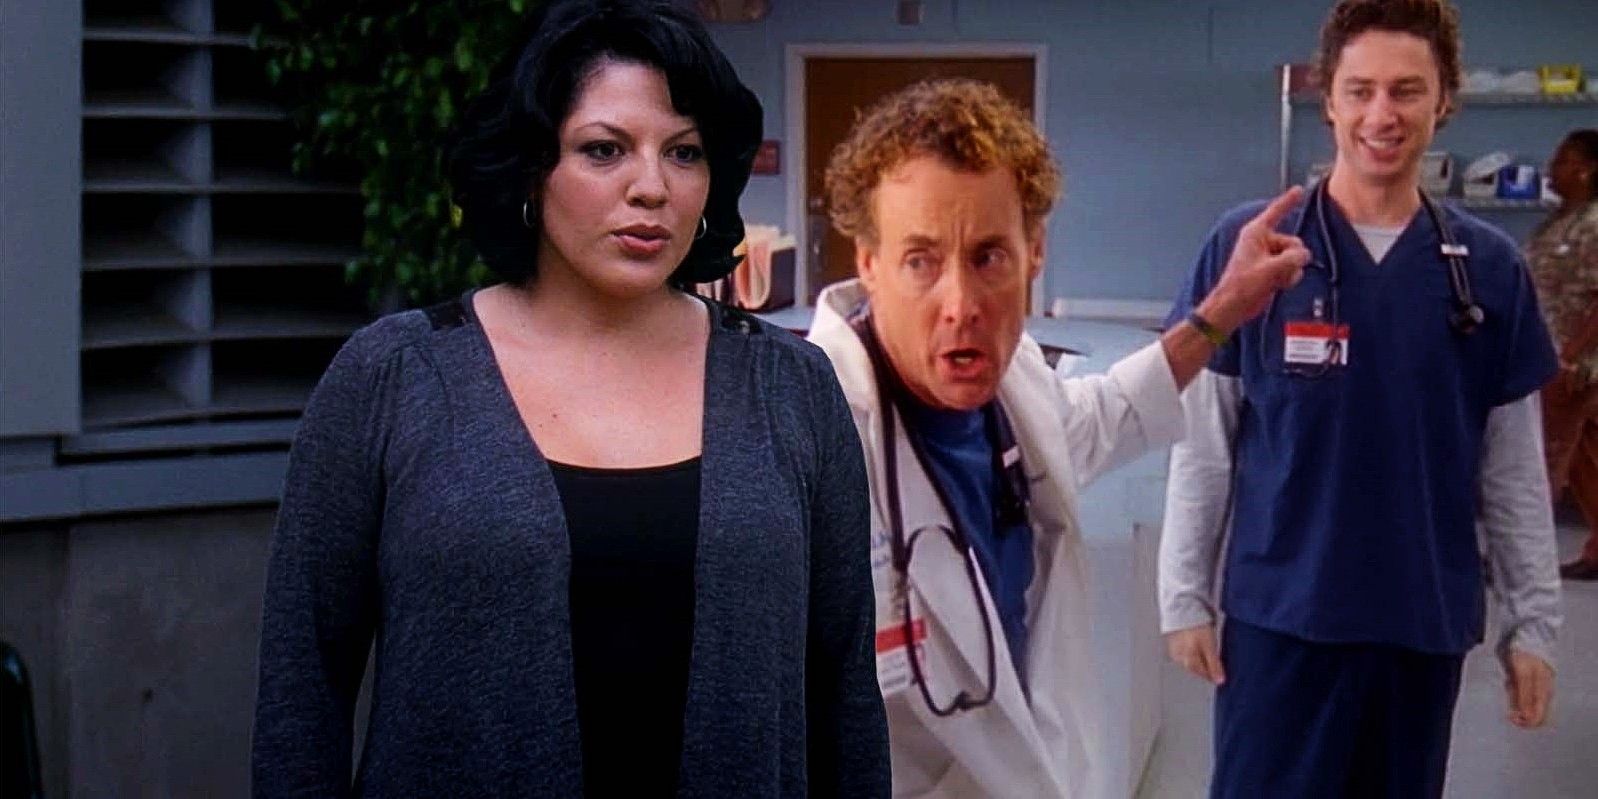 Sara Ramirez as Calliope Torres in Greys Anatomy season 7 episode 18, John C. McGinley as Dr. Cox, and Zach Braff as JD in Scrubs season 6 episode 6